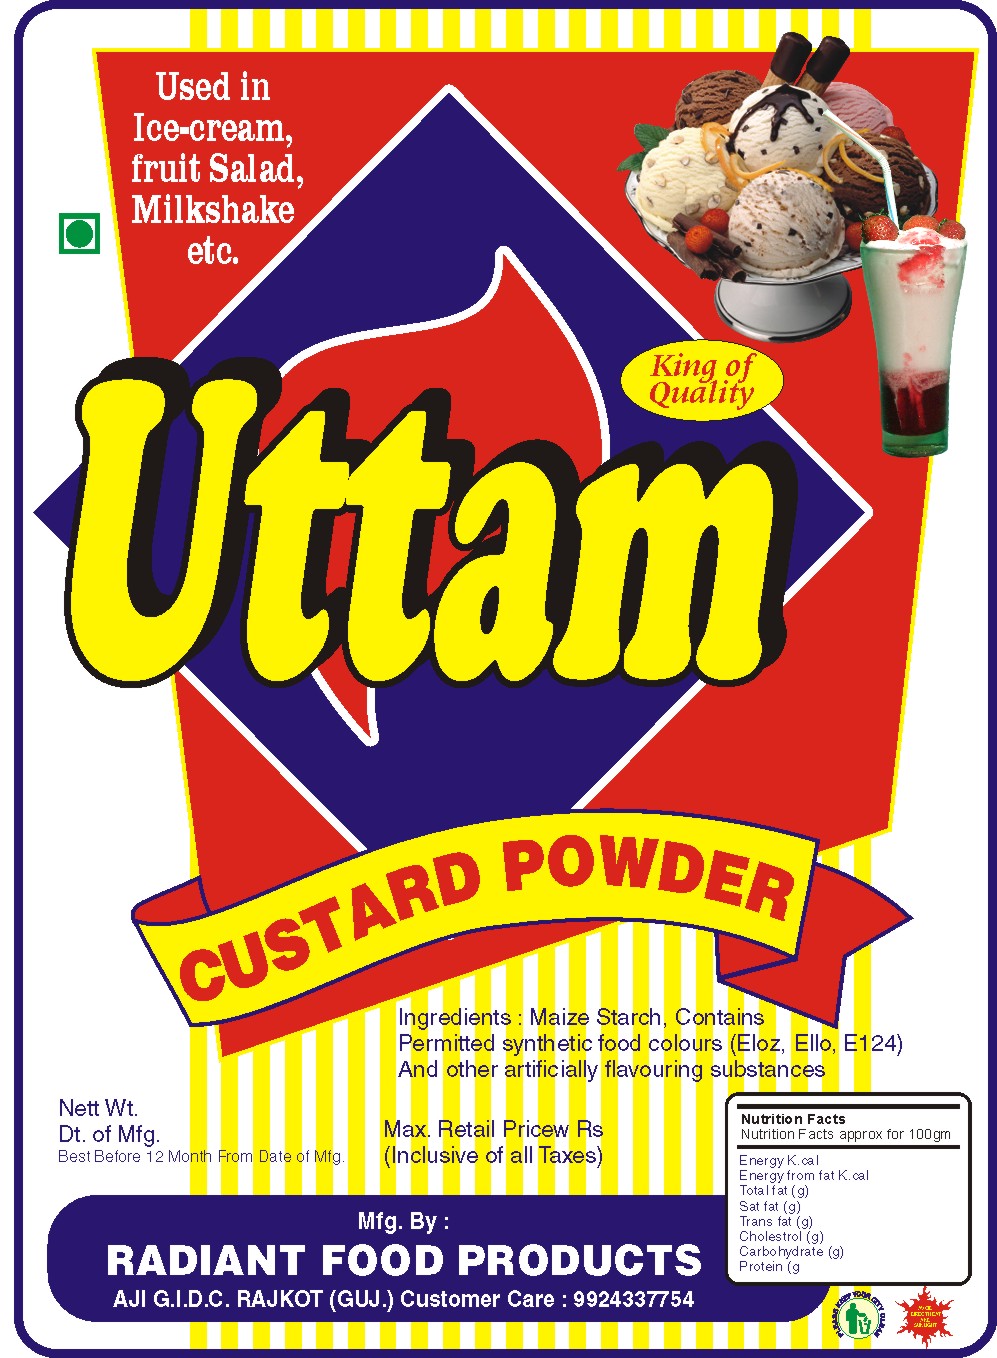 Uttam Custard Powder